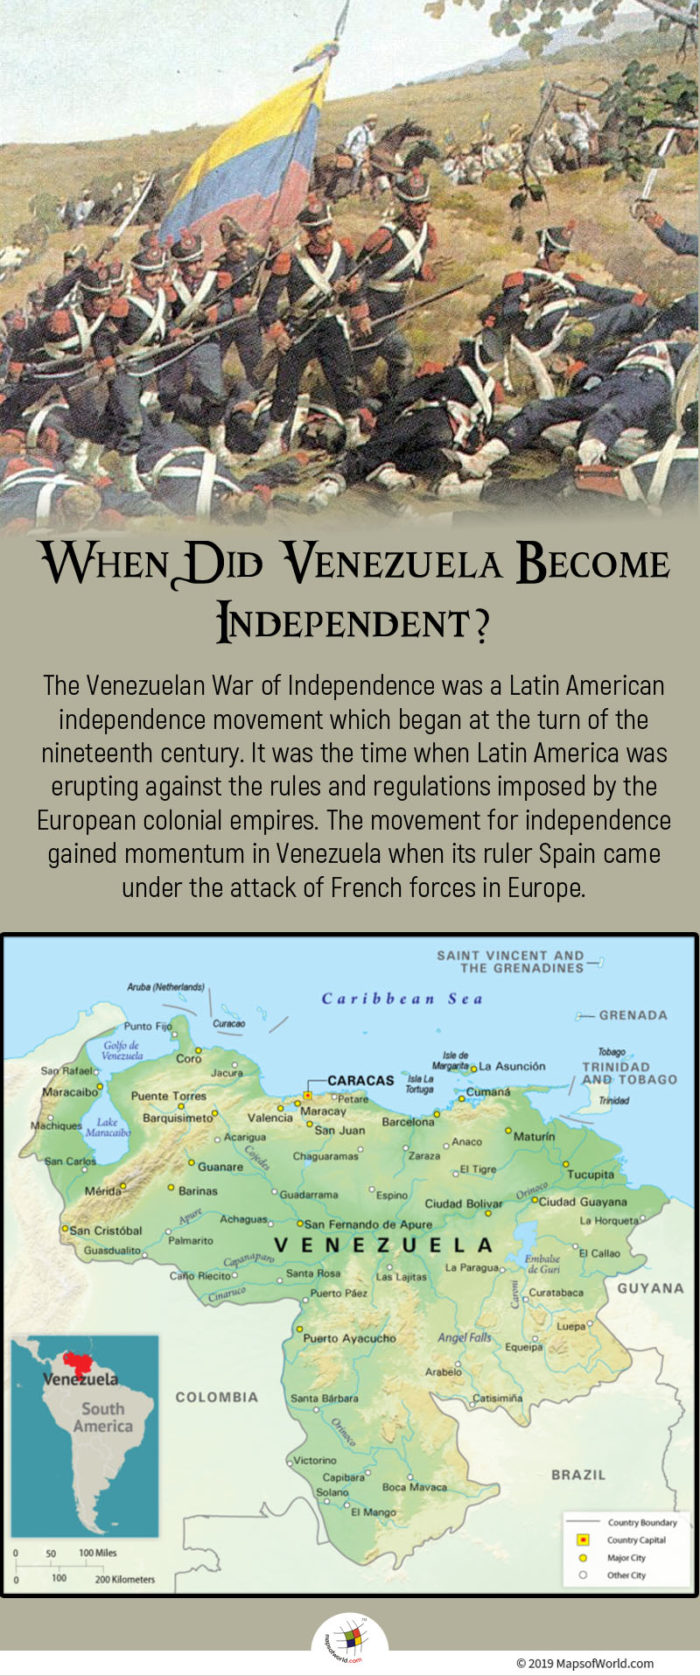 The Venezuelan War of Independence